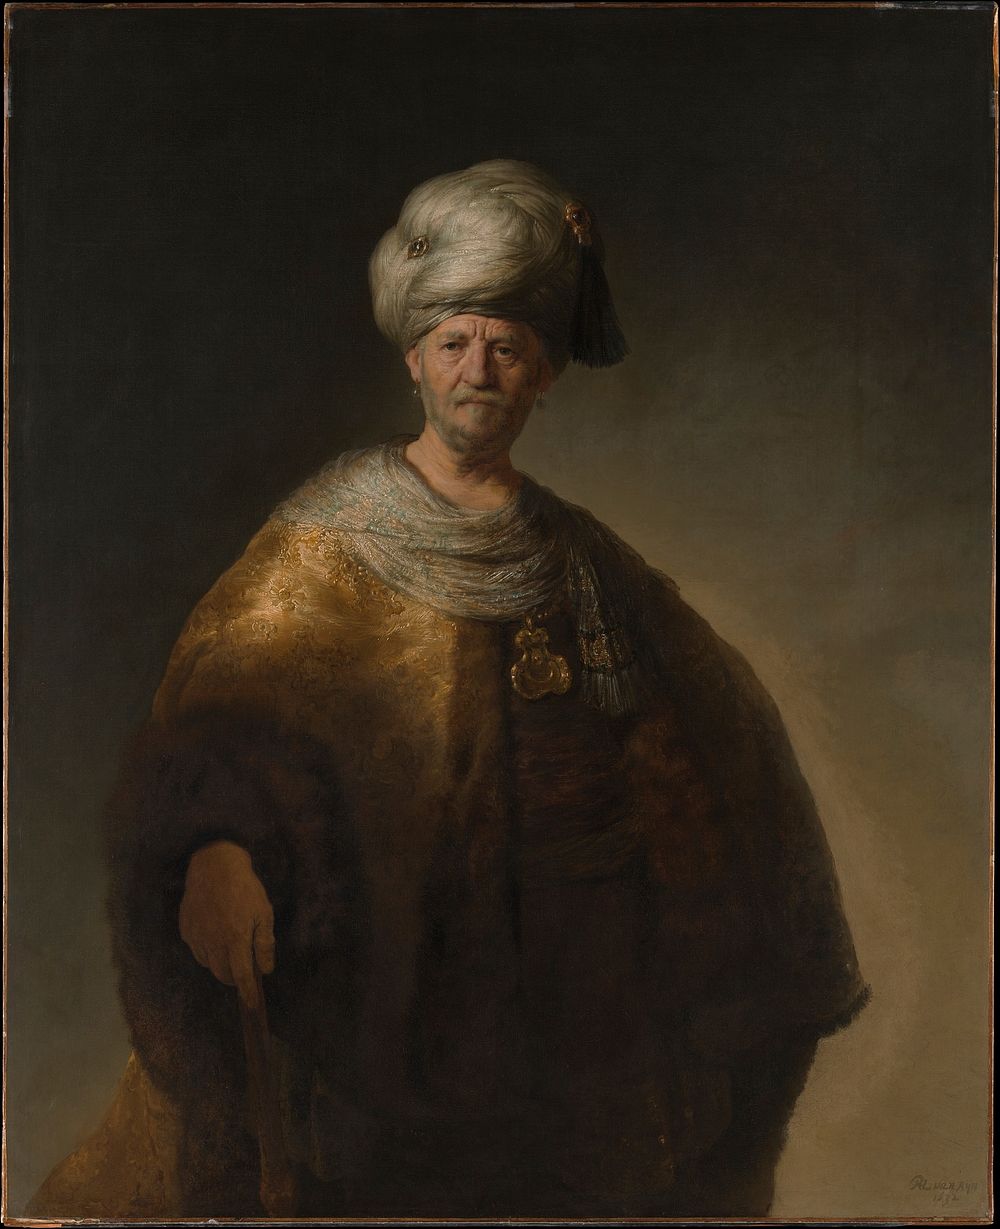 Man in a Turban by Rembrandt van Rijn